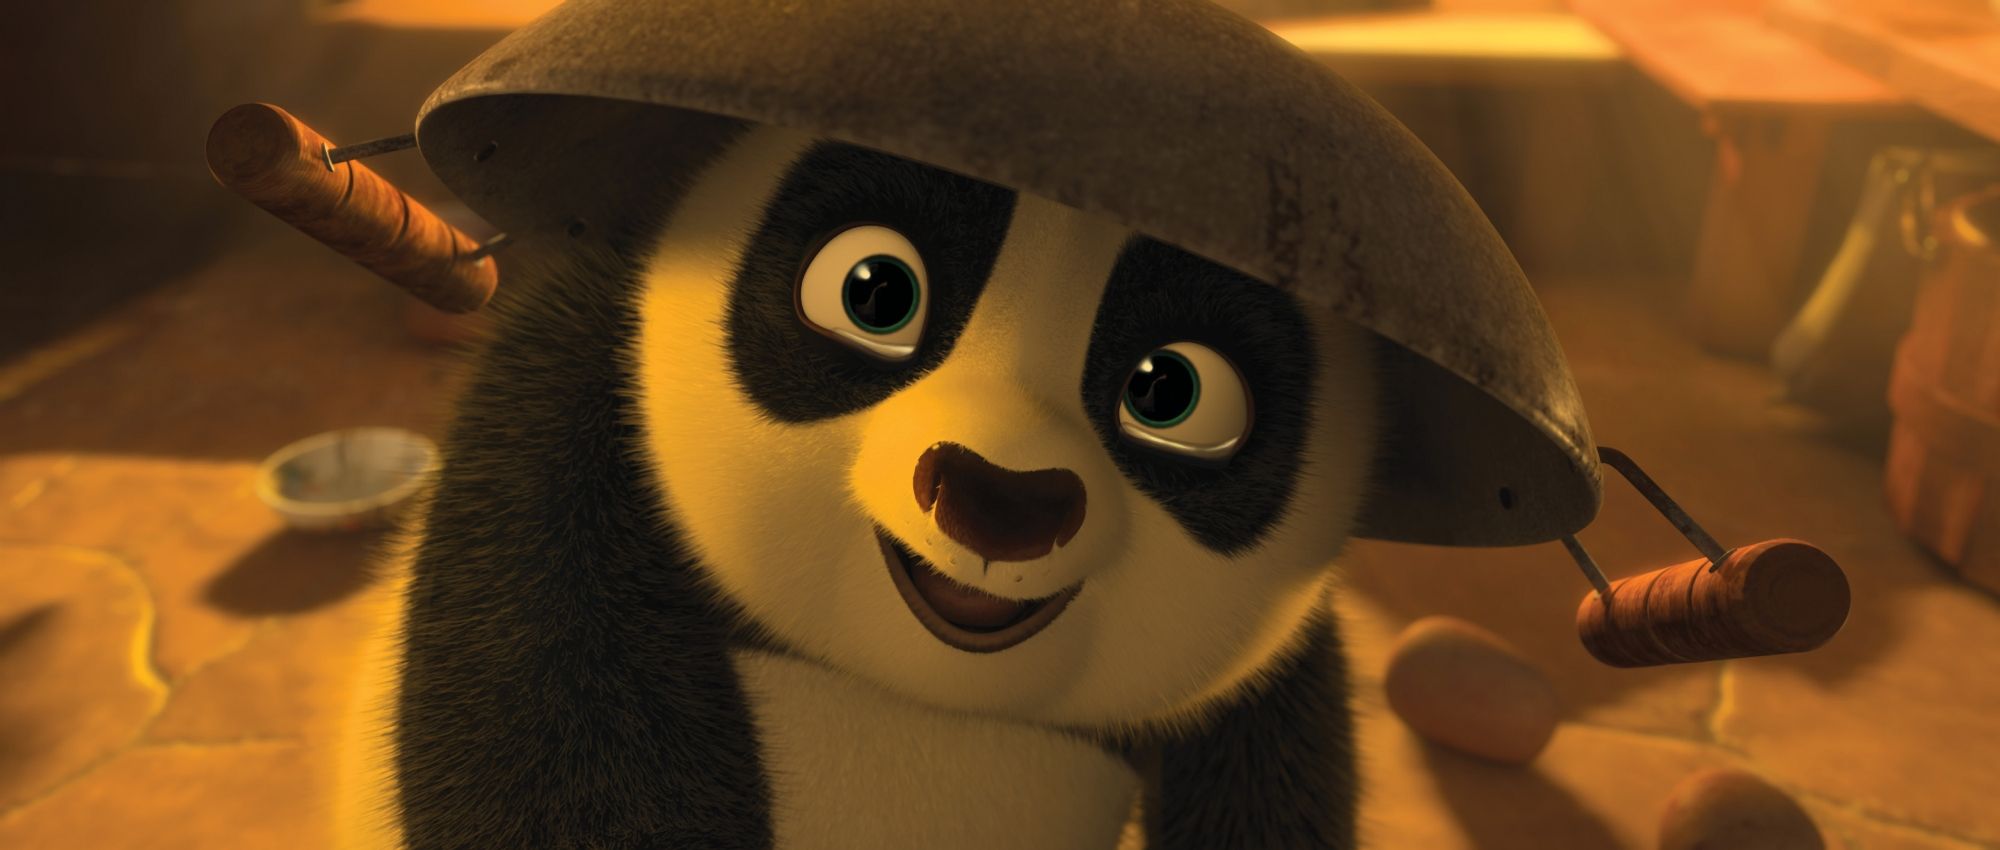 Kung Fu Panda 2 Movie Full HD Wallpaper Image for Android ...